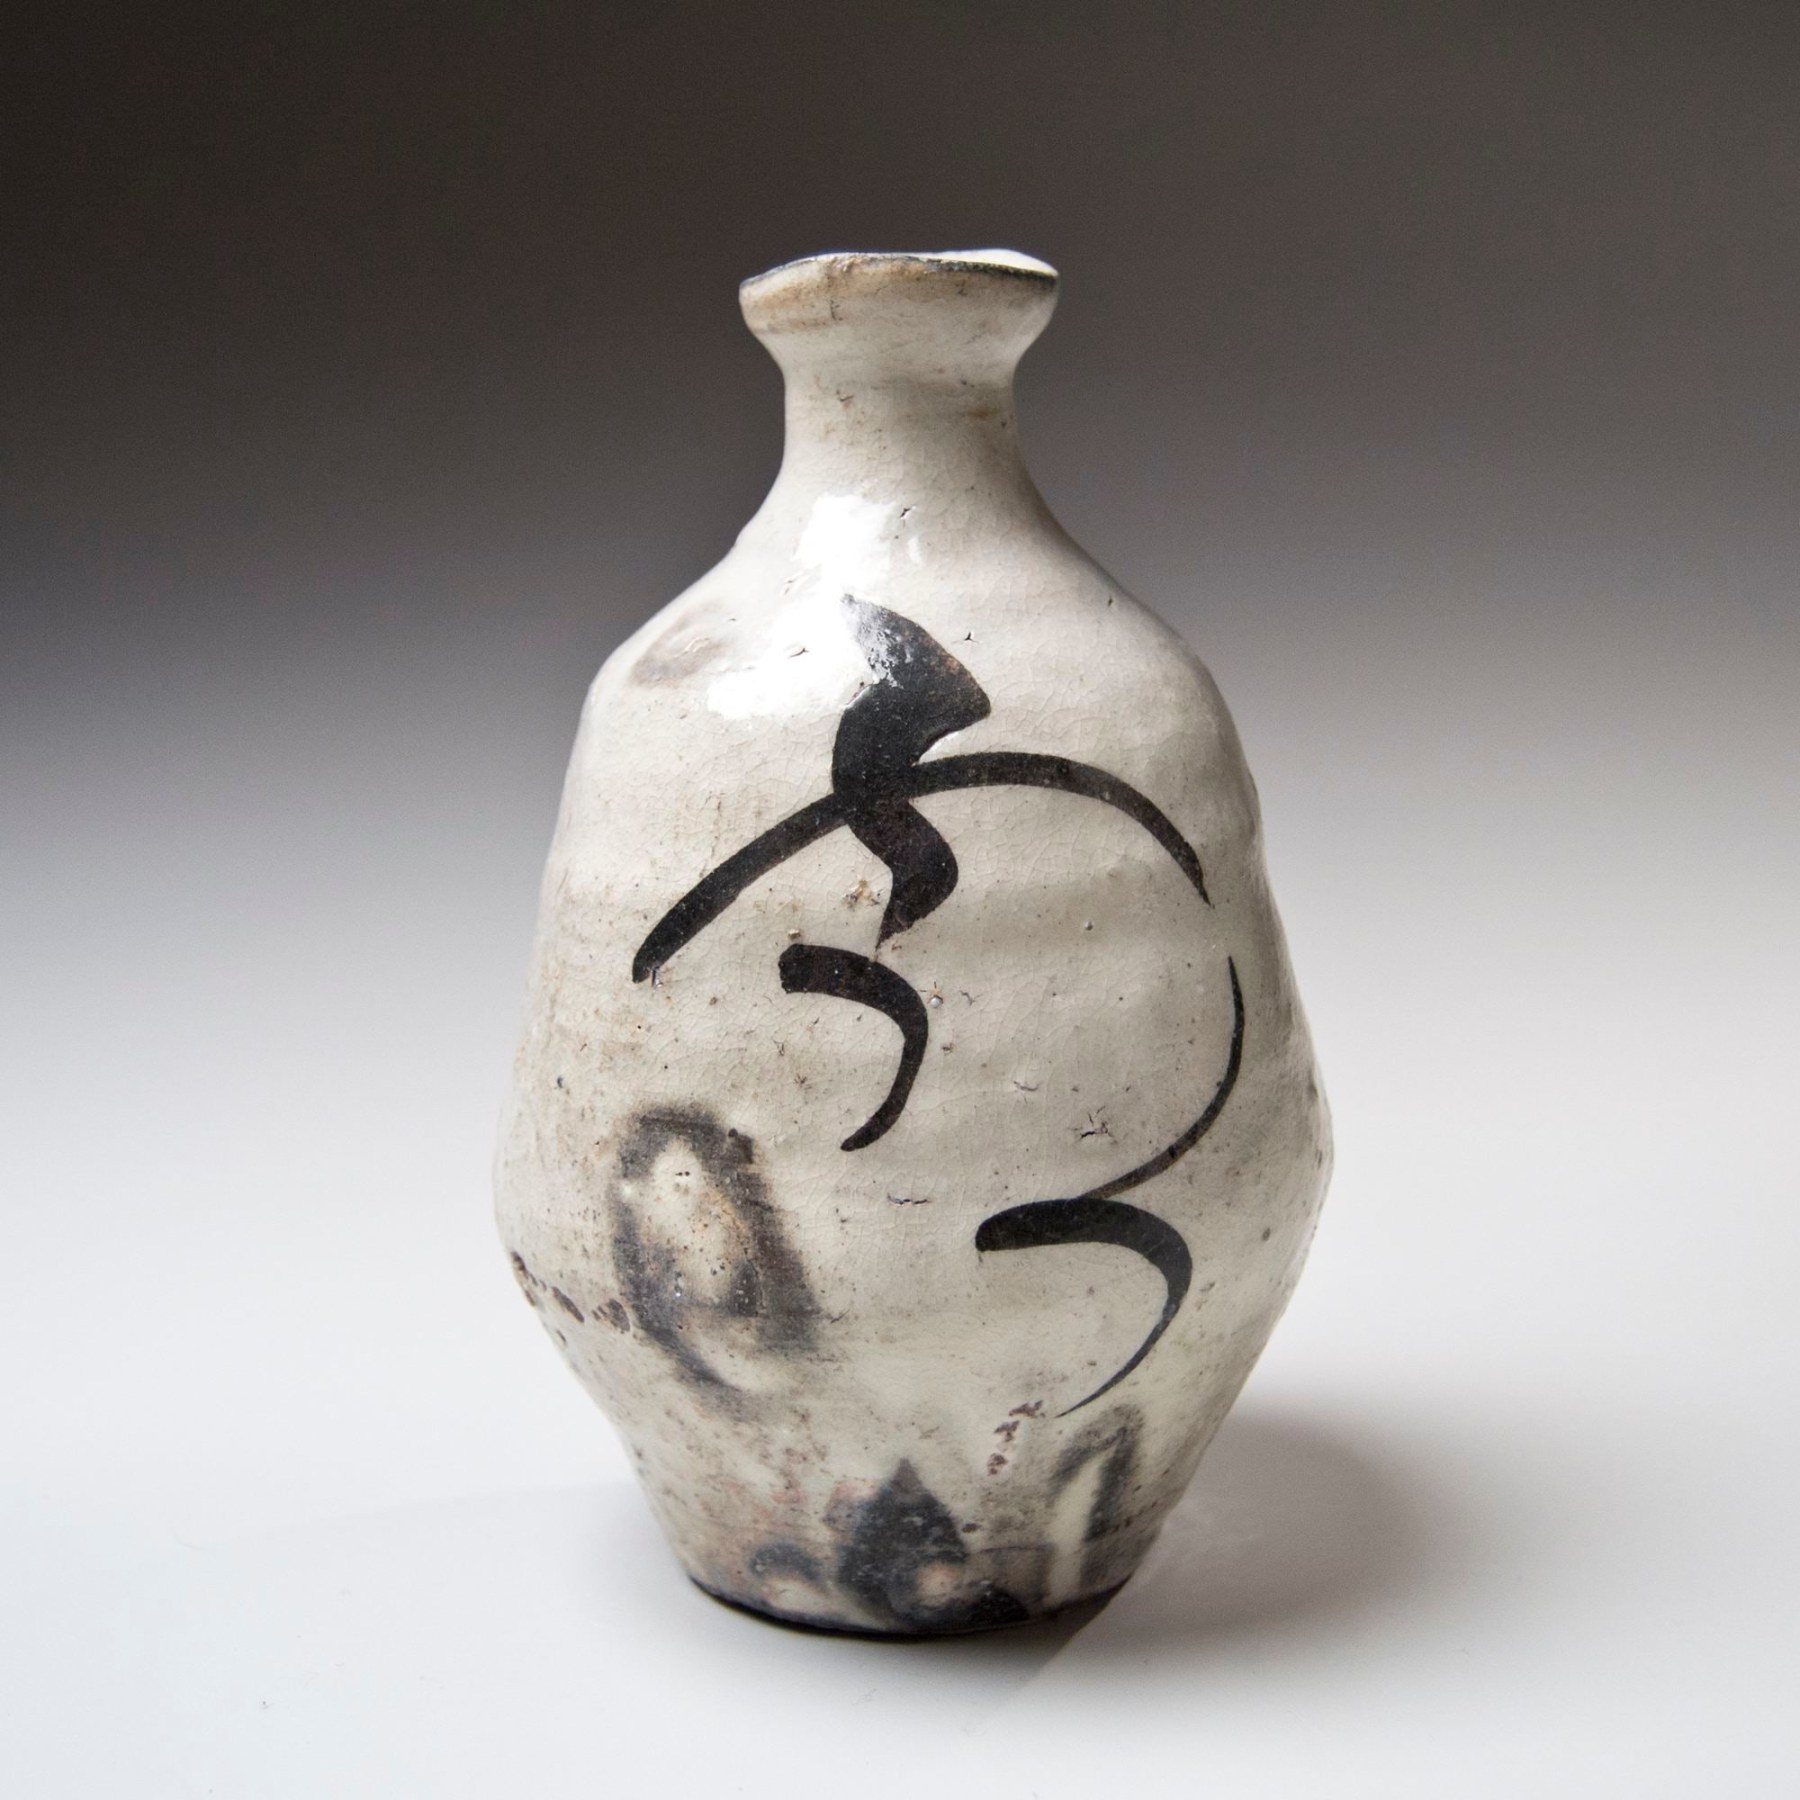 Kawakami Kiyomi (b. 1948), Kohiki-glazed (white slip with translucent overglaze) tokkuri (sake flask) with calligraphic patterning in iron glaze